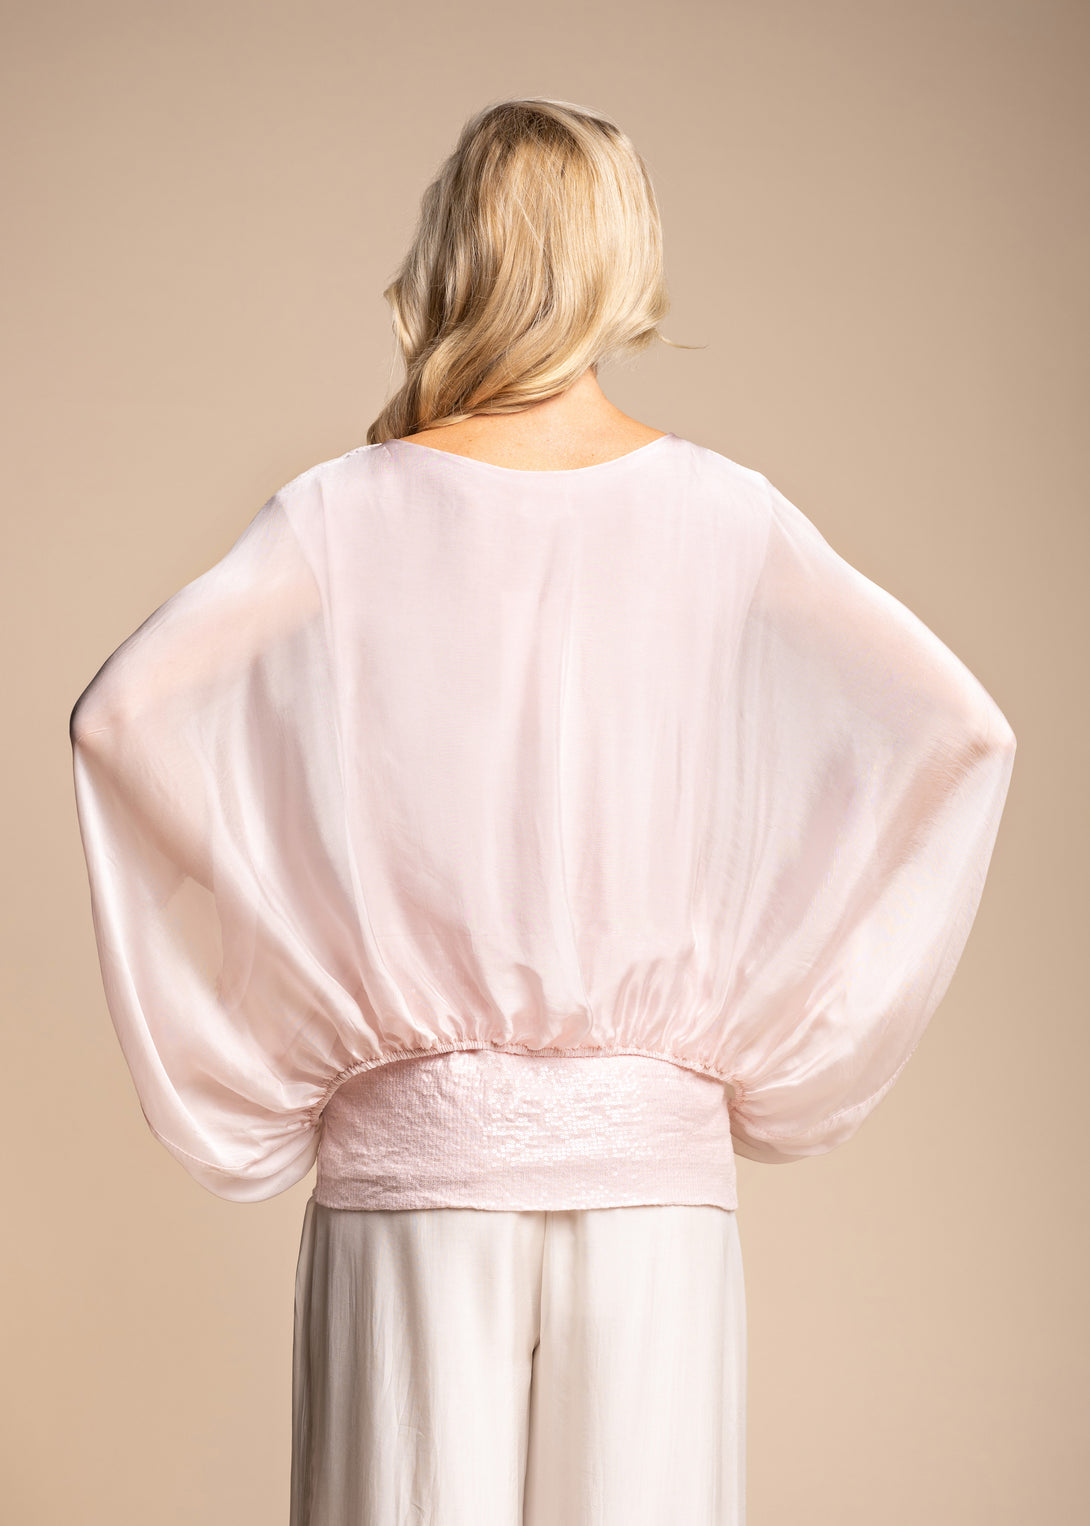 Marcella Silk Top in Blush - Imagine Fashion